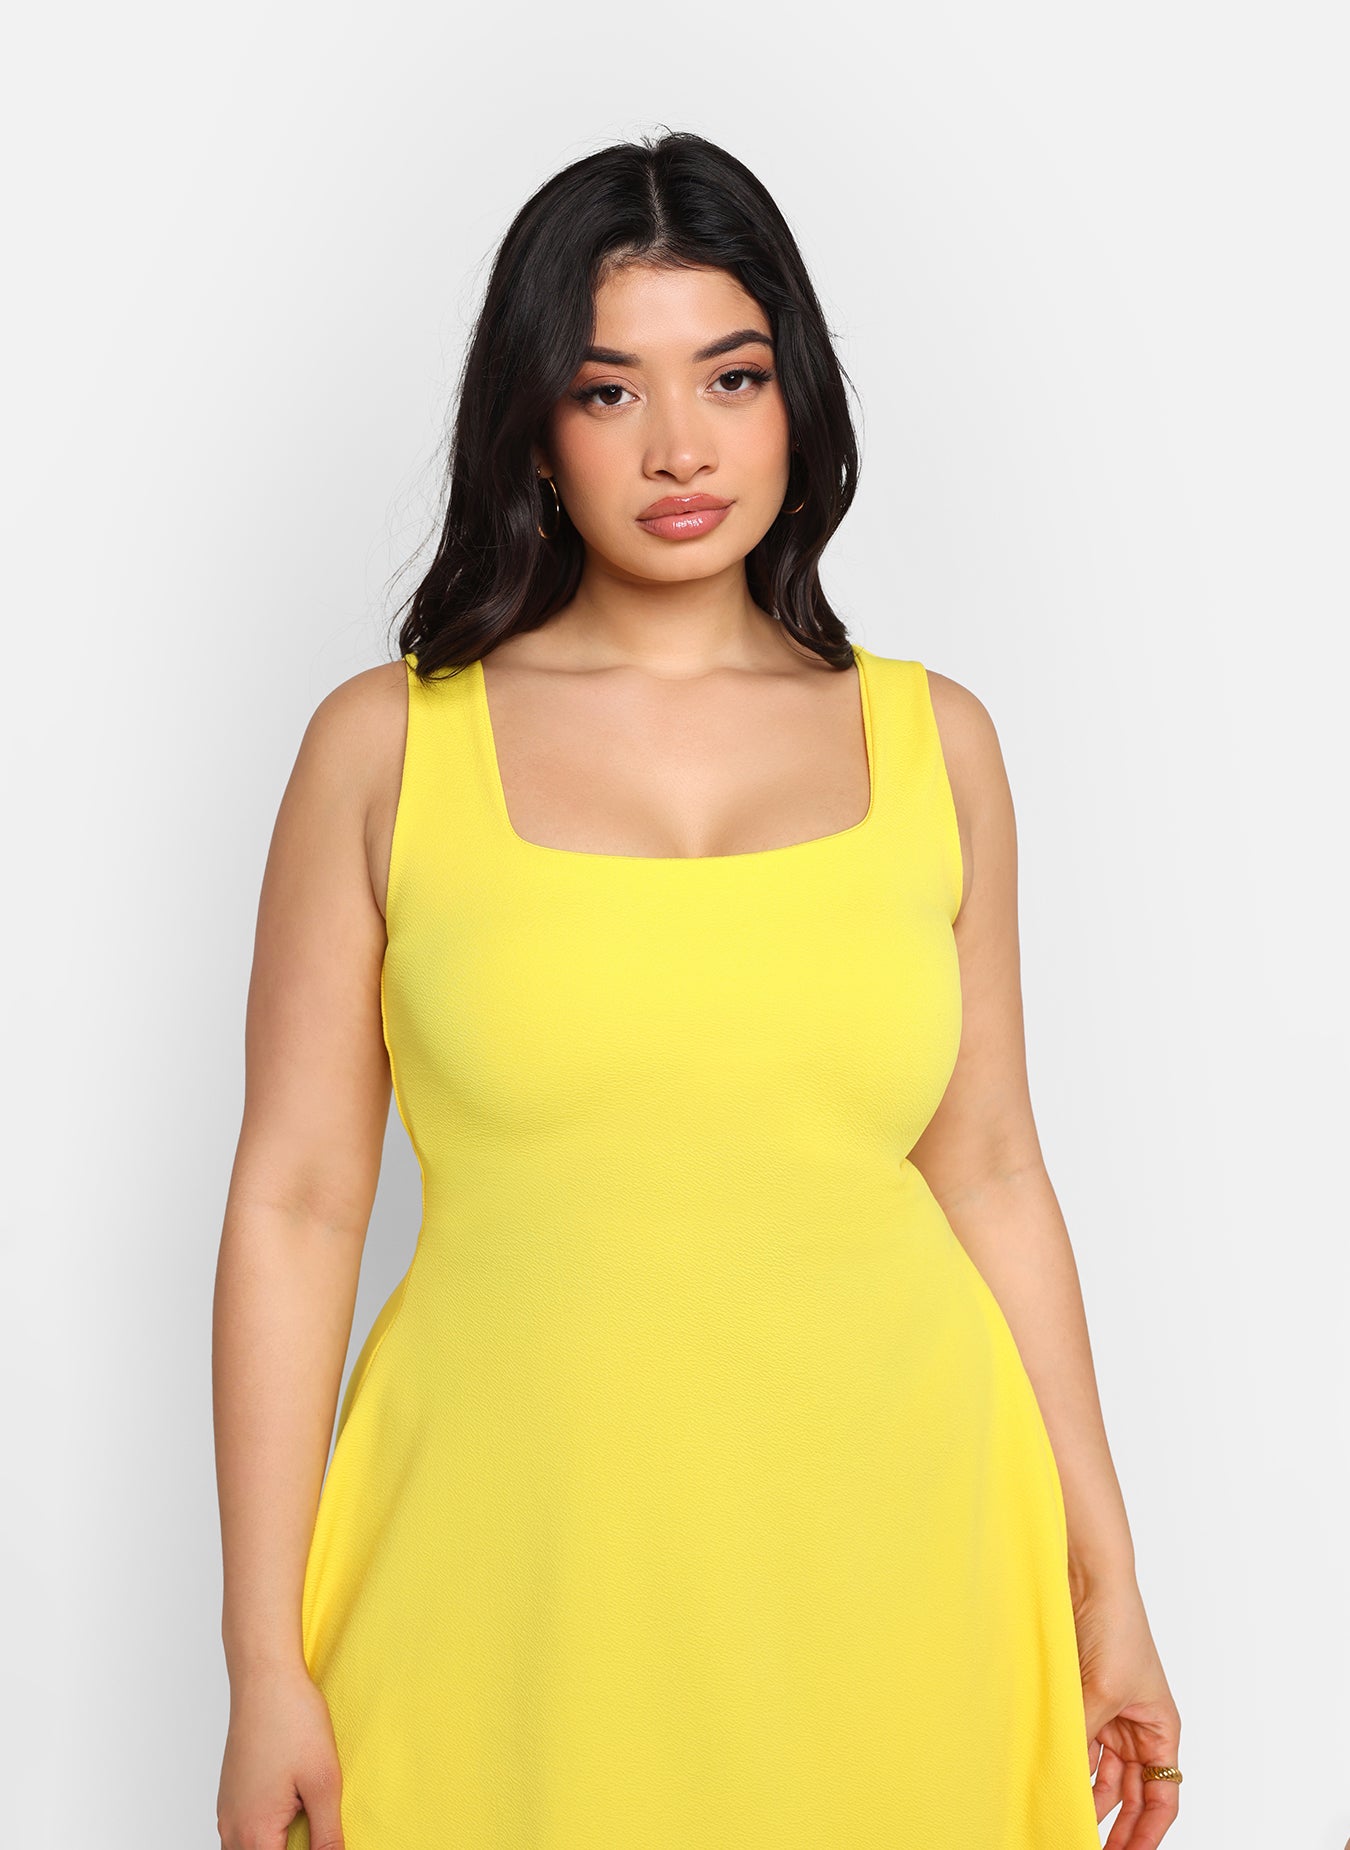 Nathalie Square Neck Midi A Line Dress - Bright Yellow